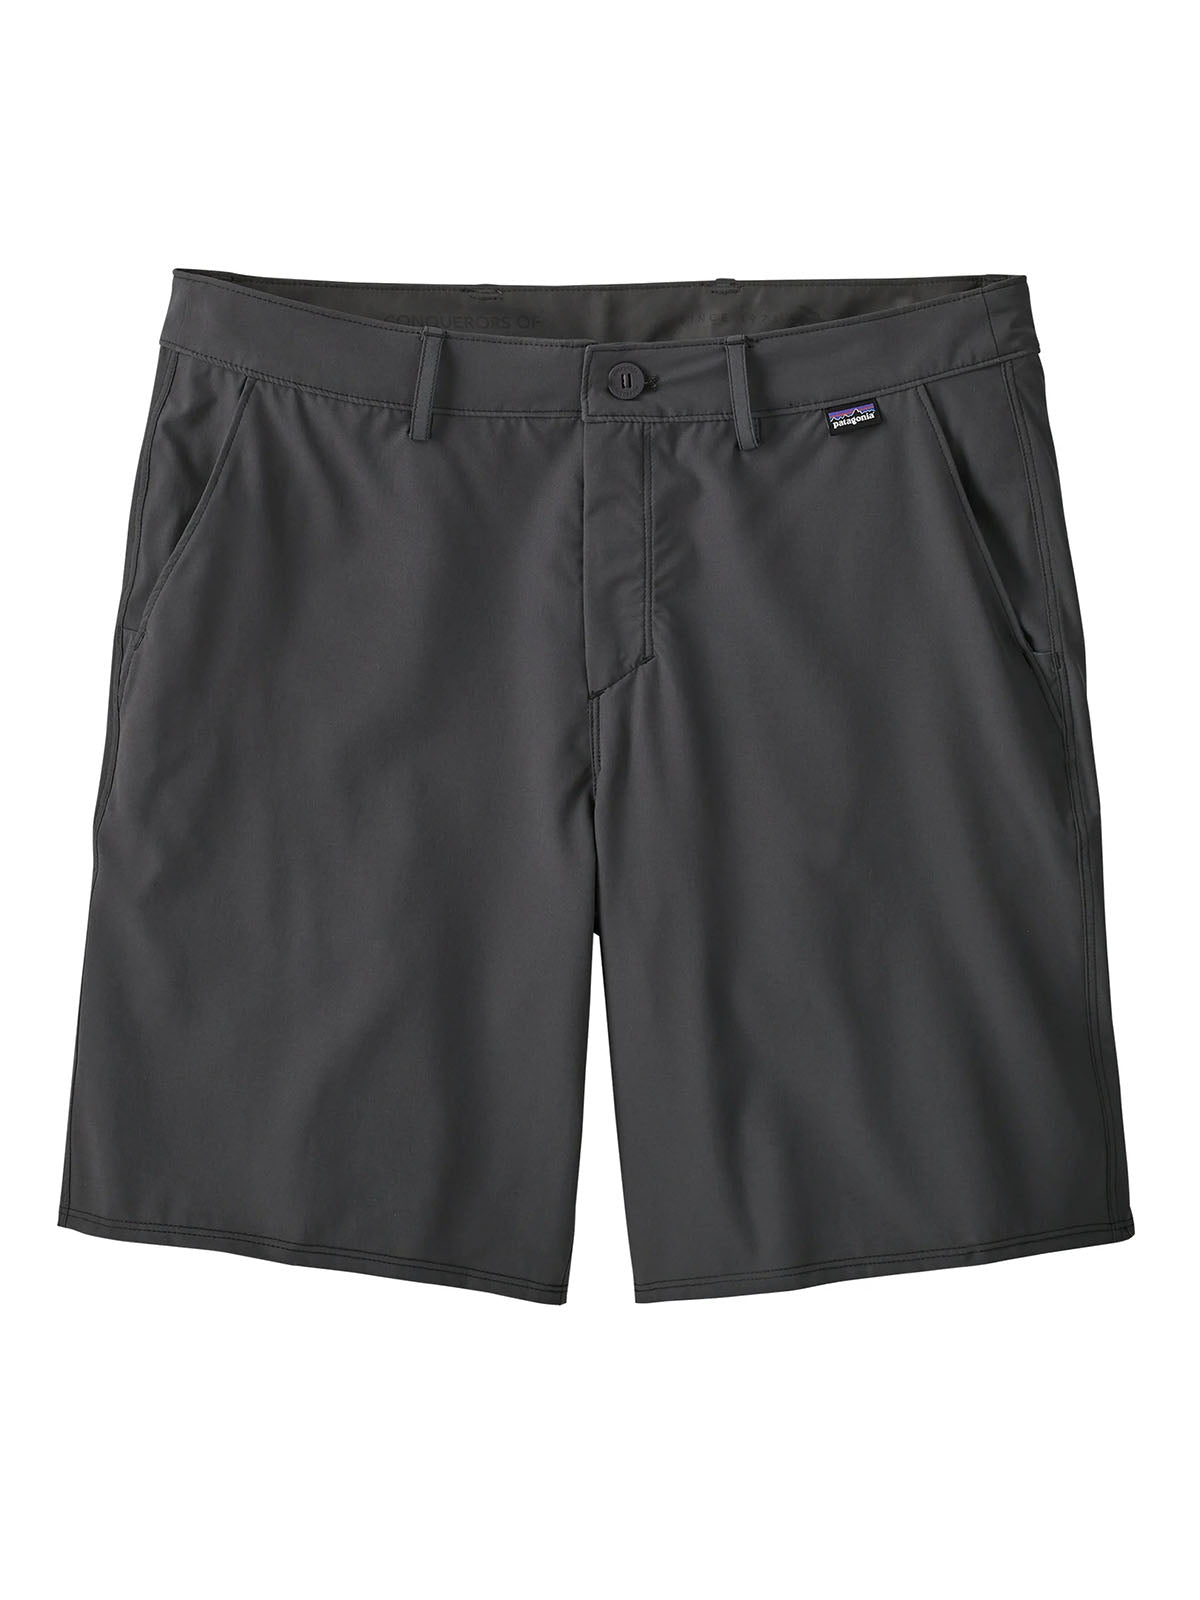 Patagonia Men's Bermuda - Hydropeak Hybrid Walk Shorts - Black